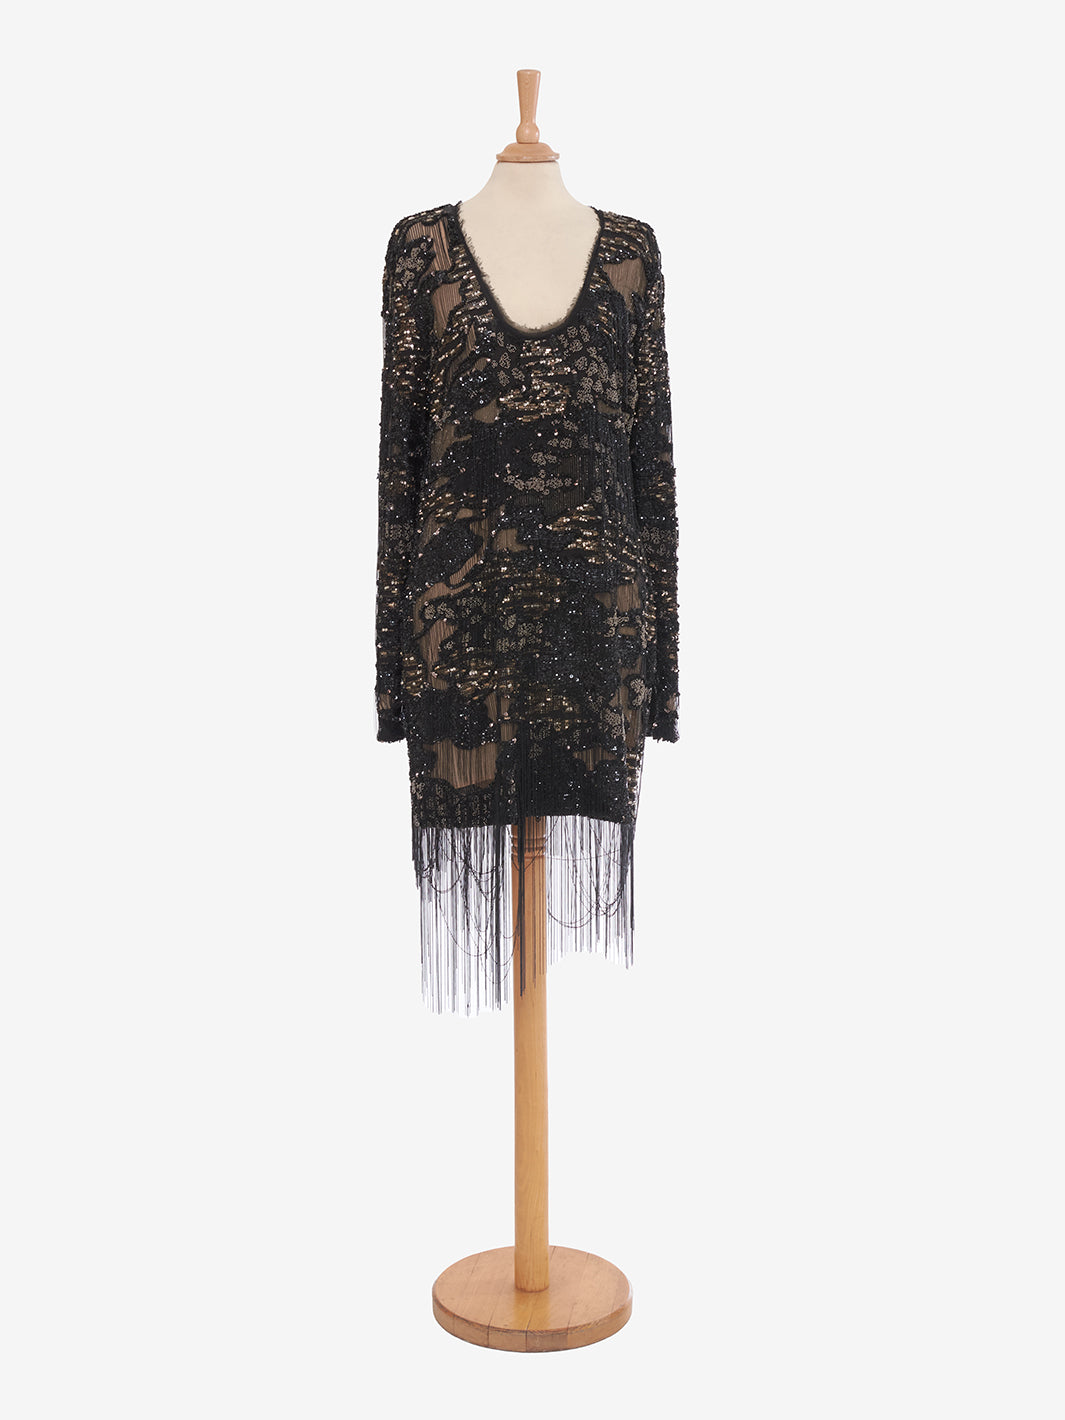 Roberto Cavalli Black silk dress embroidered with appliqués